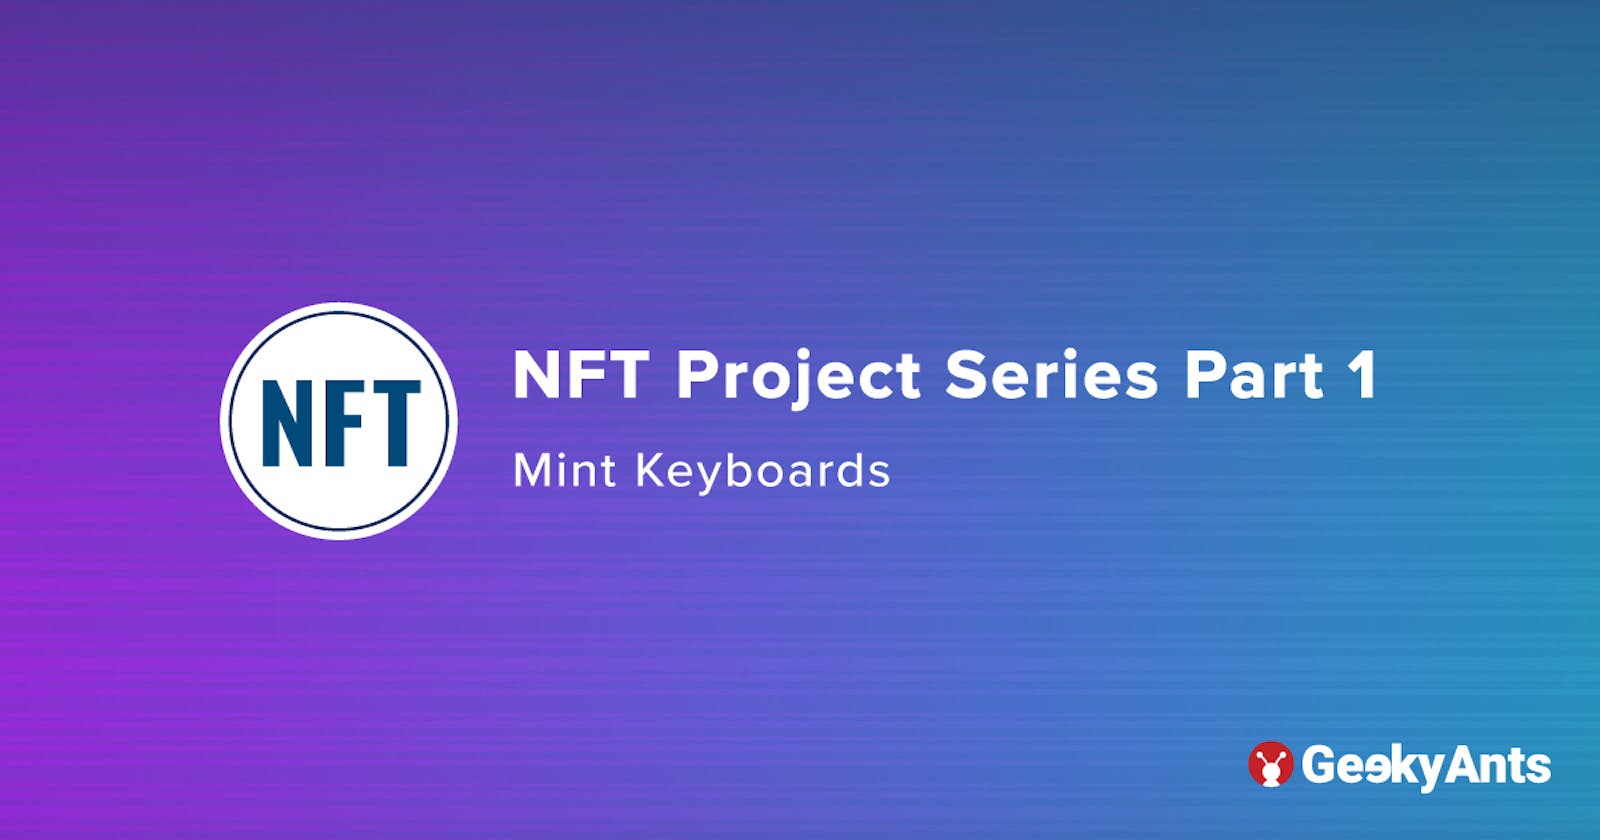 NFT Project Series Part 1: Mint Keyboards